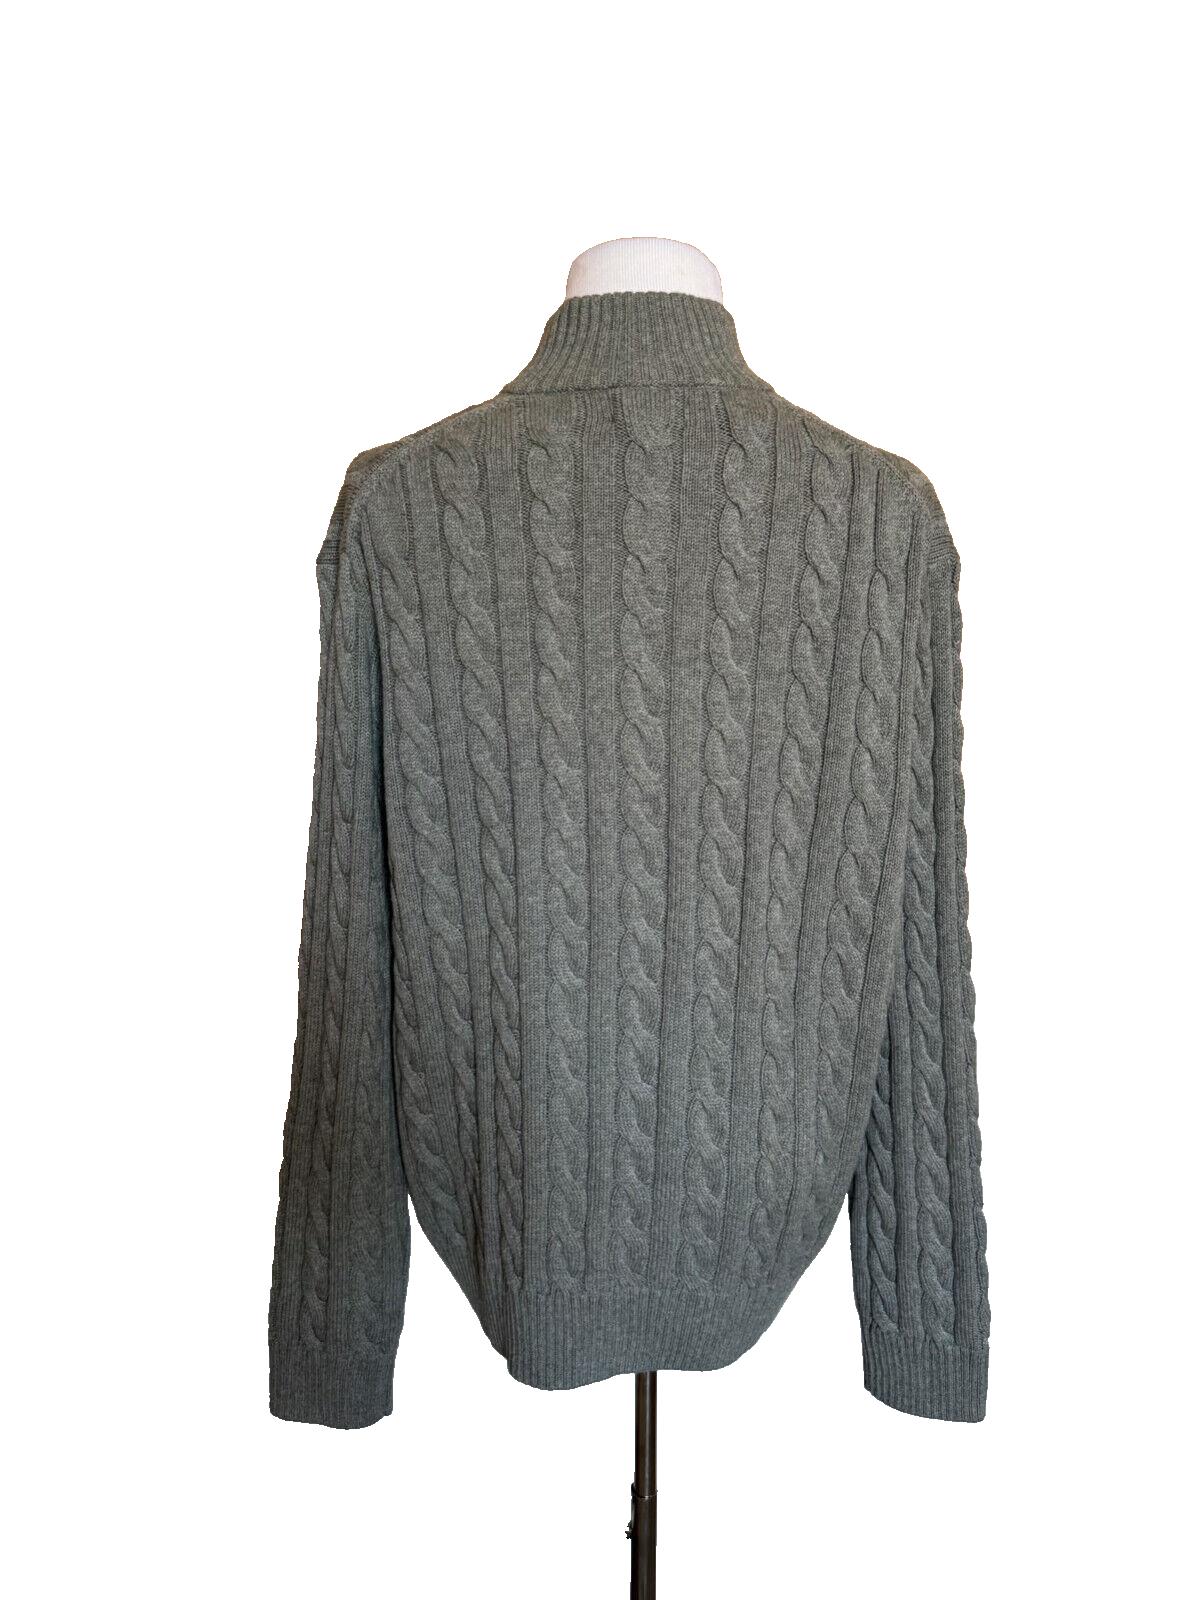 NWT $148 Polo Ralph Lauren Men's Gray Cotton Zip Knit Sweater 2XL/2TG